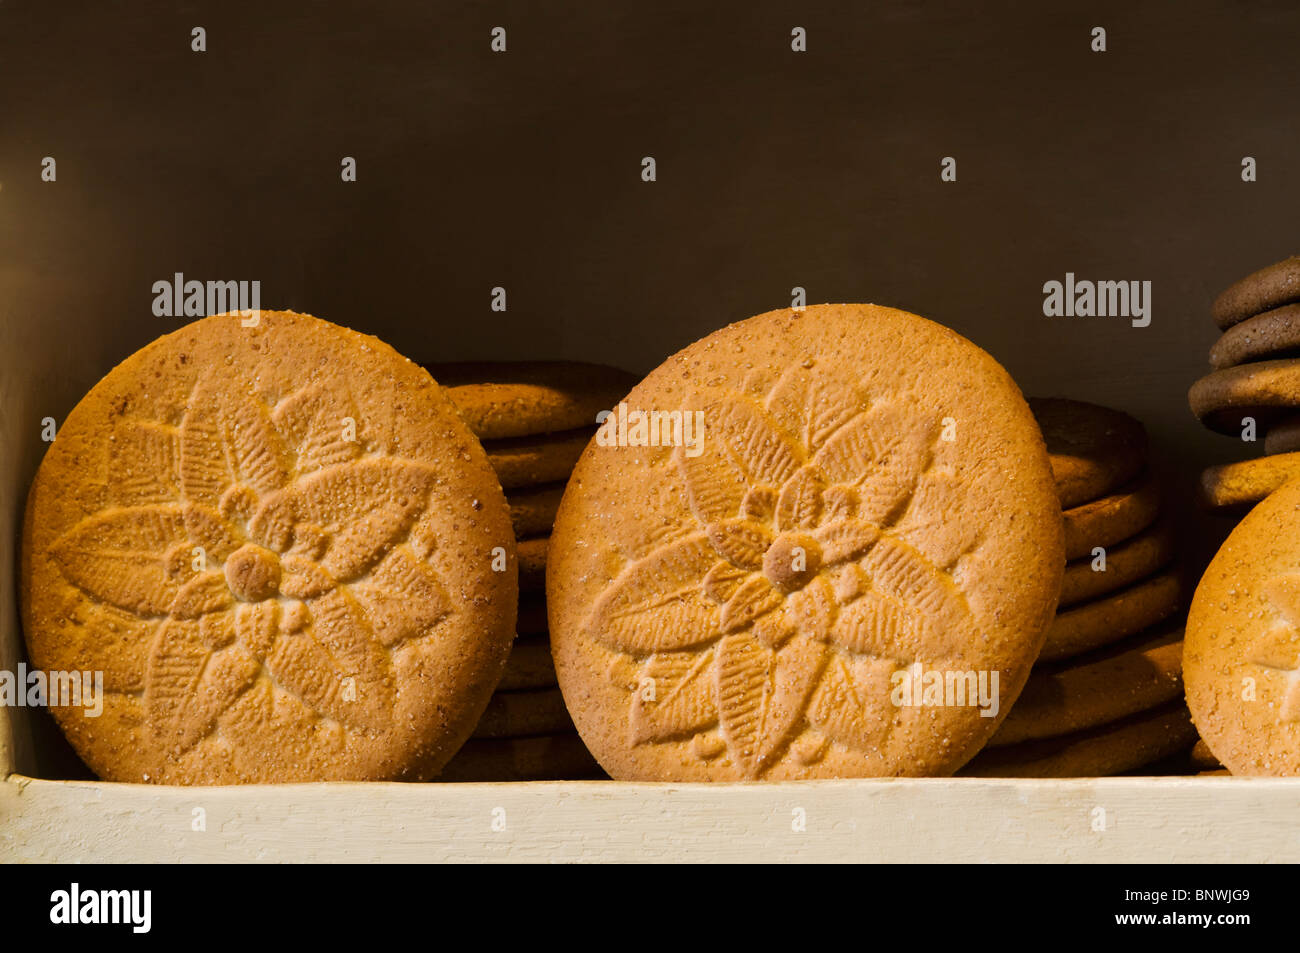 Belgium, Brussels, Specialty biscuits Stock Photo